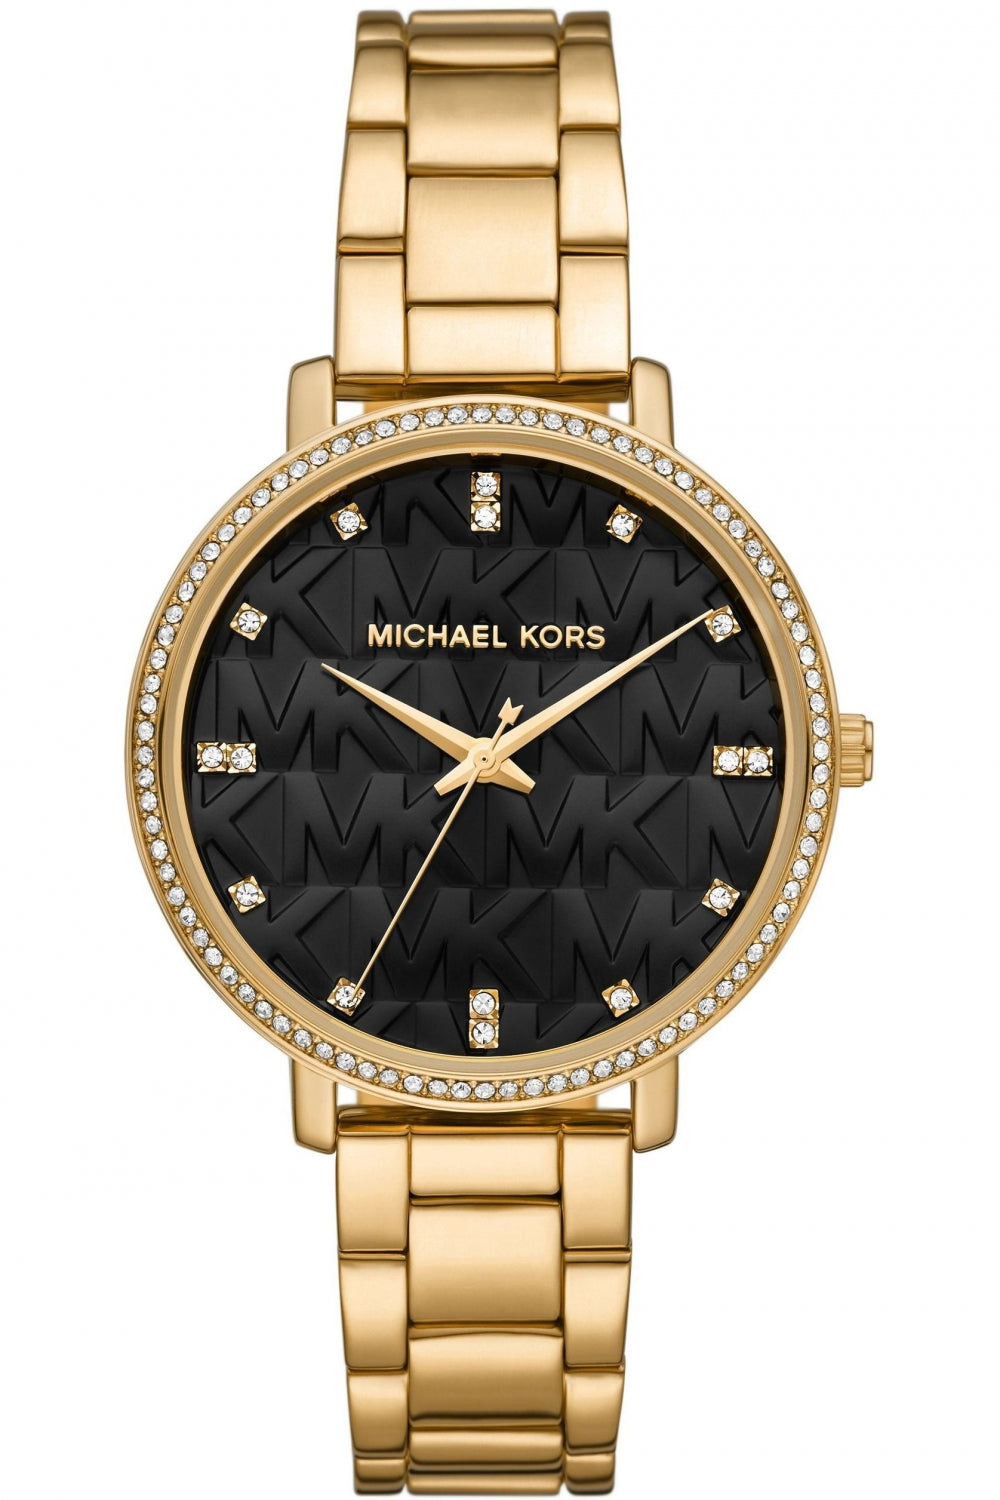 MICHAEL KORS
Pyper Quartz Crystal Black Dial Ladies Watch
MK4593